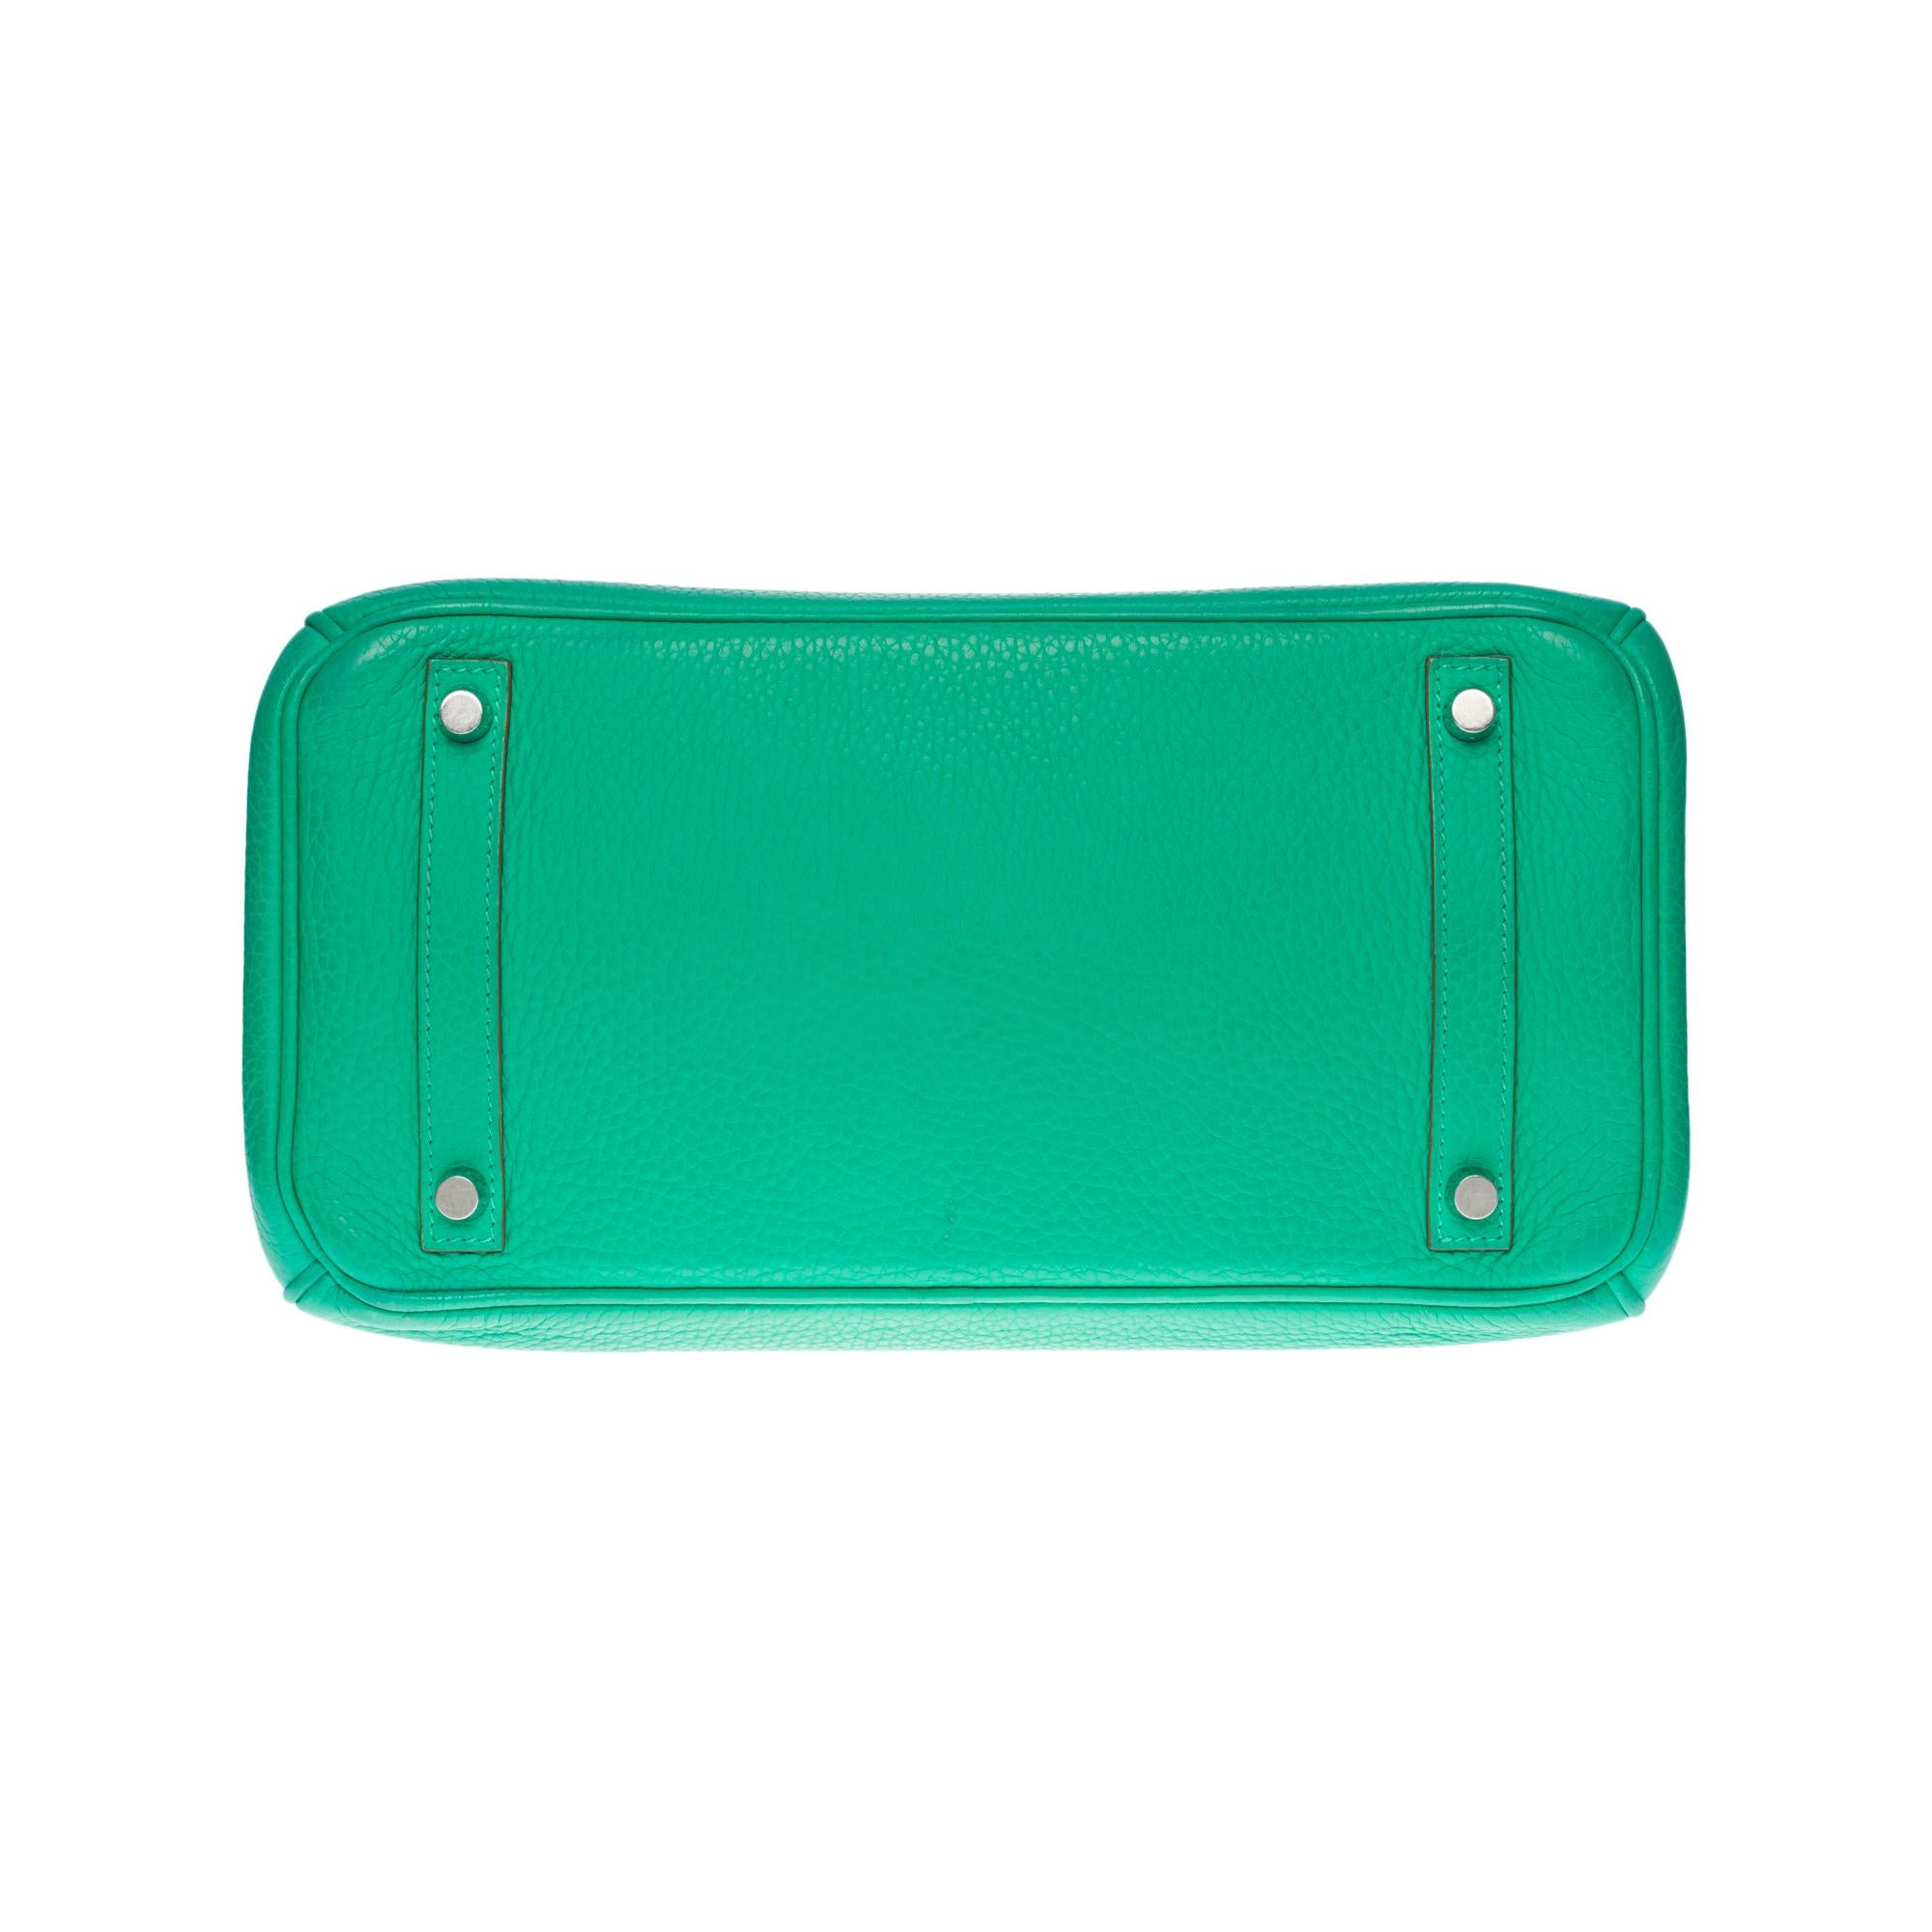 Bright Hermès Birkin 30 handbag in Vert Menthe Taurillon Clémence leather, SHW 3